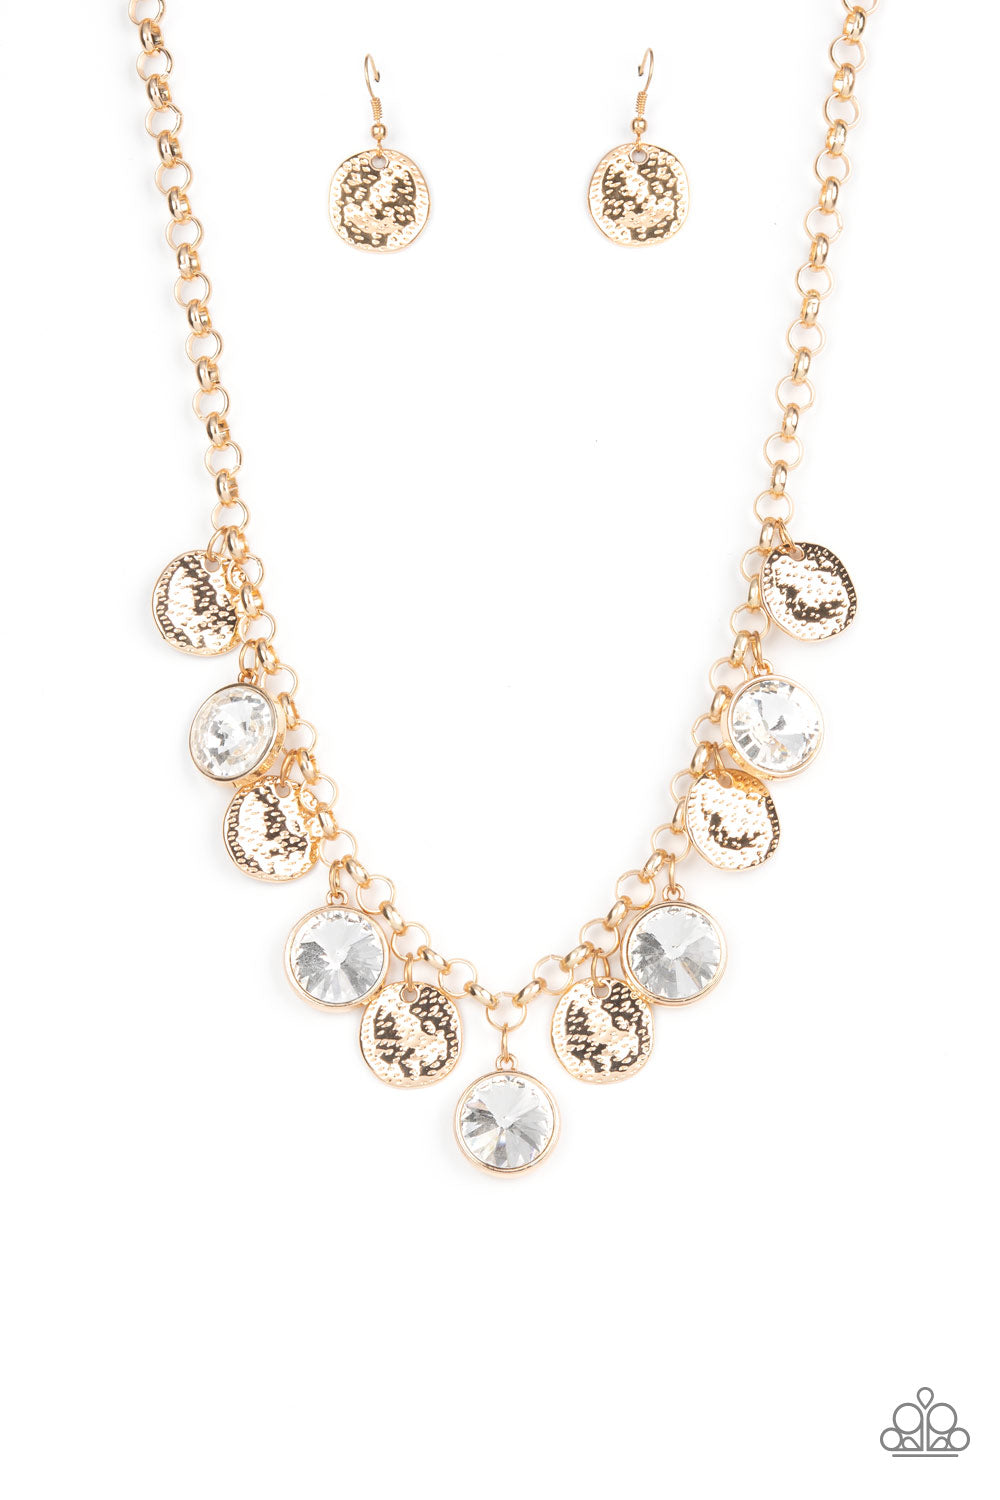 Spot On Sparkle - Gold Paparazzi Necklace